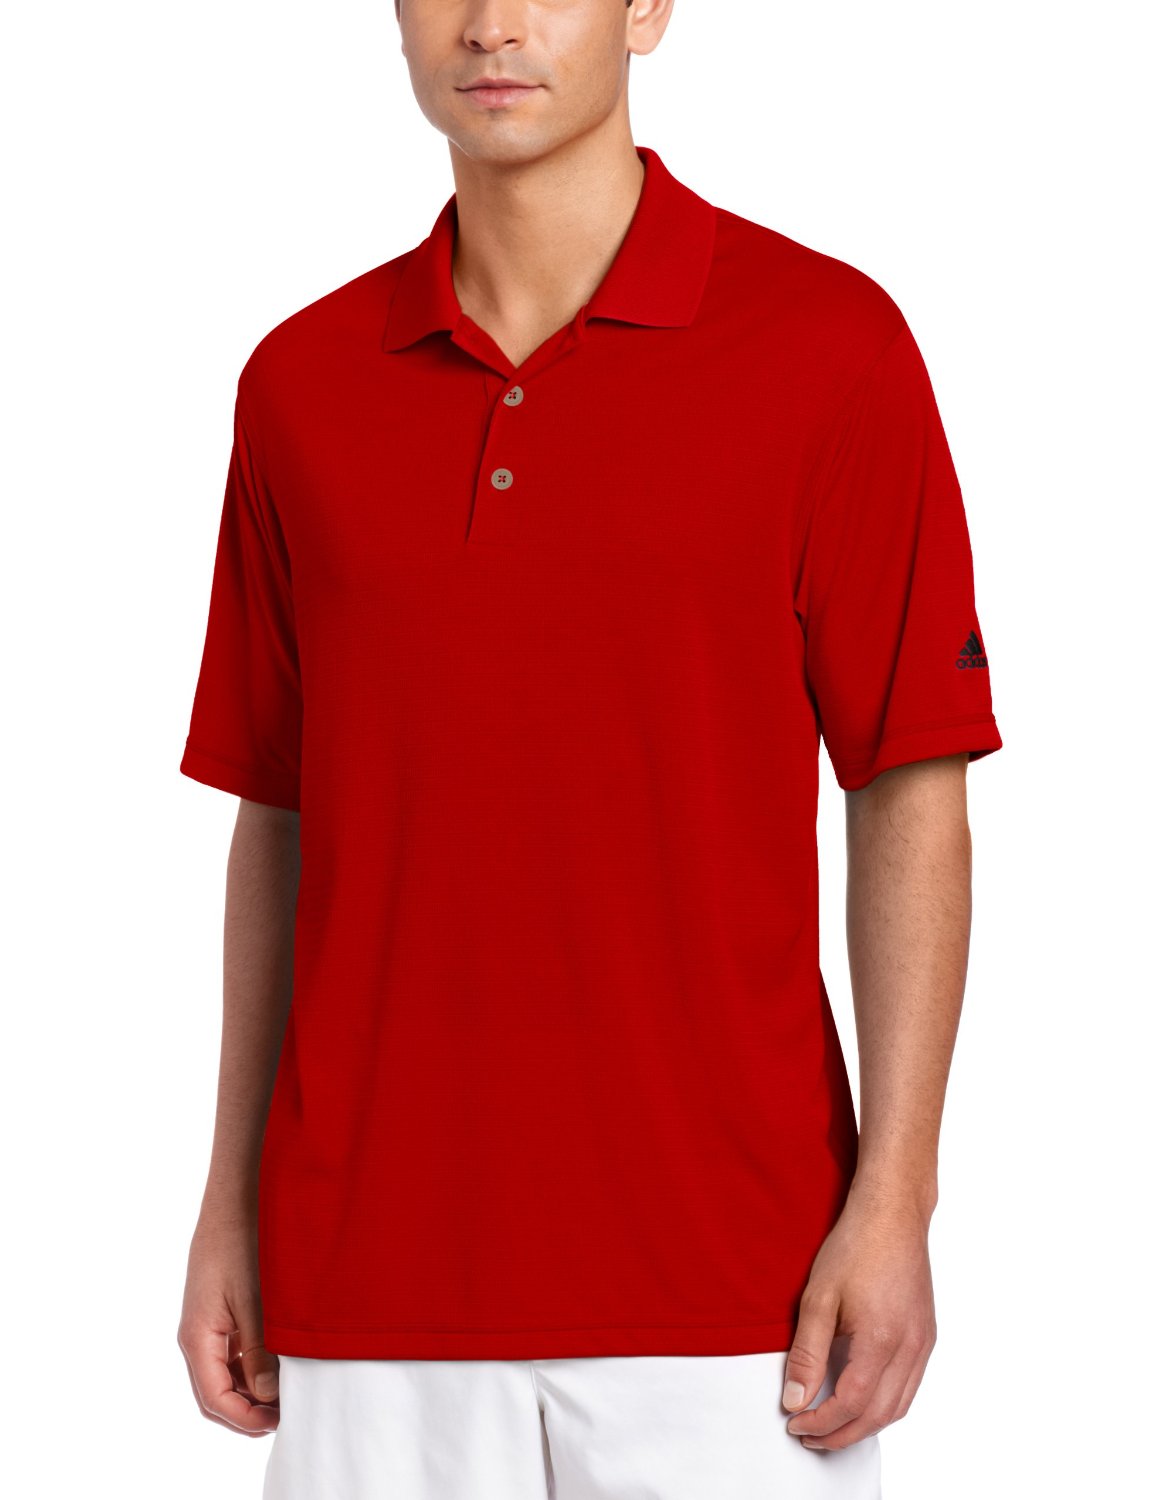 Adidas Mens Climalite Solid Golf Shirts